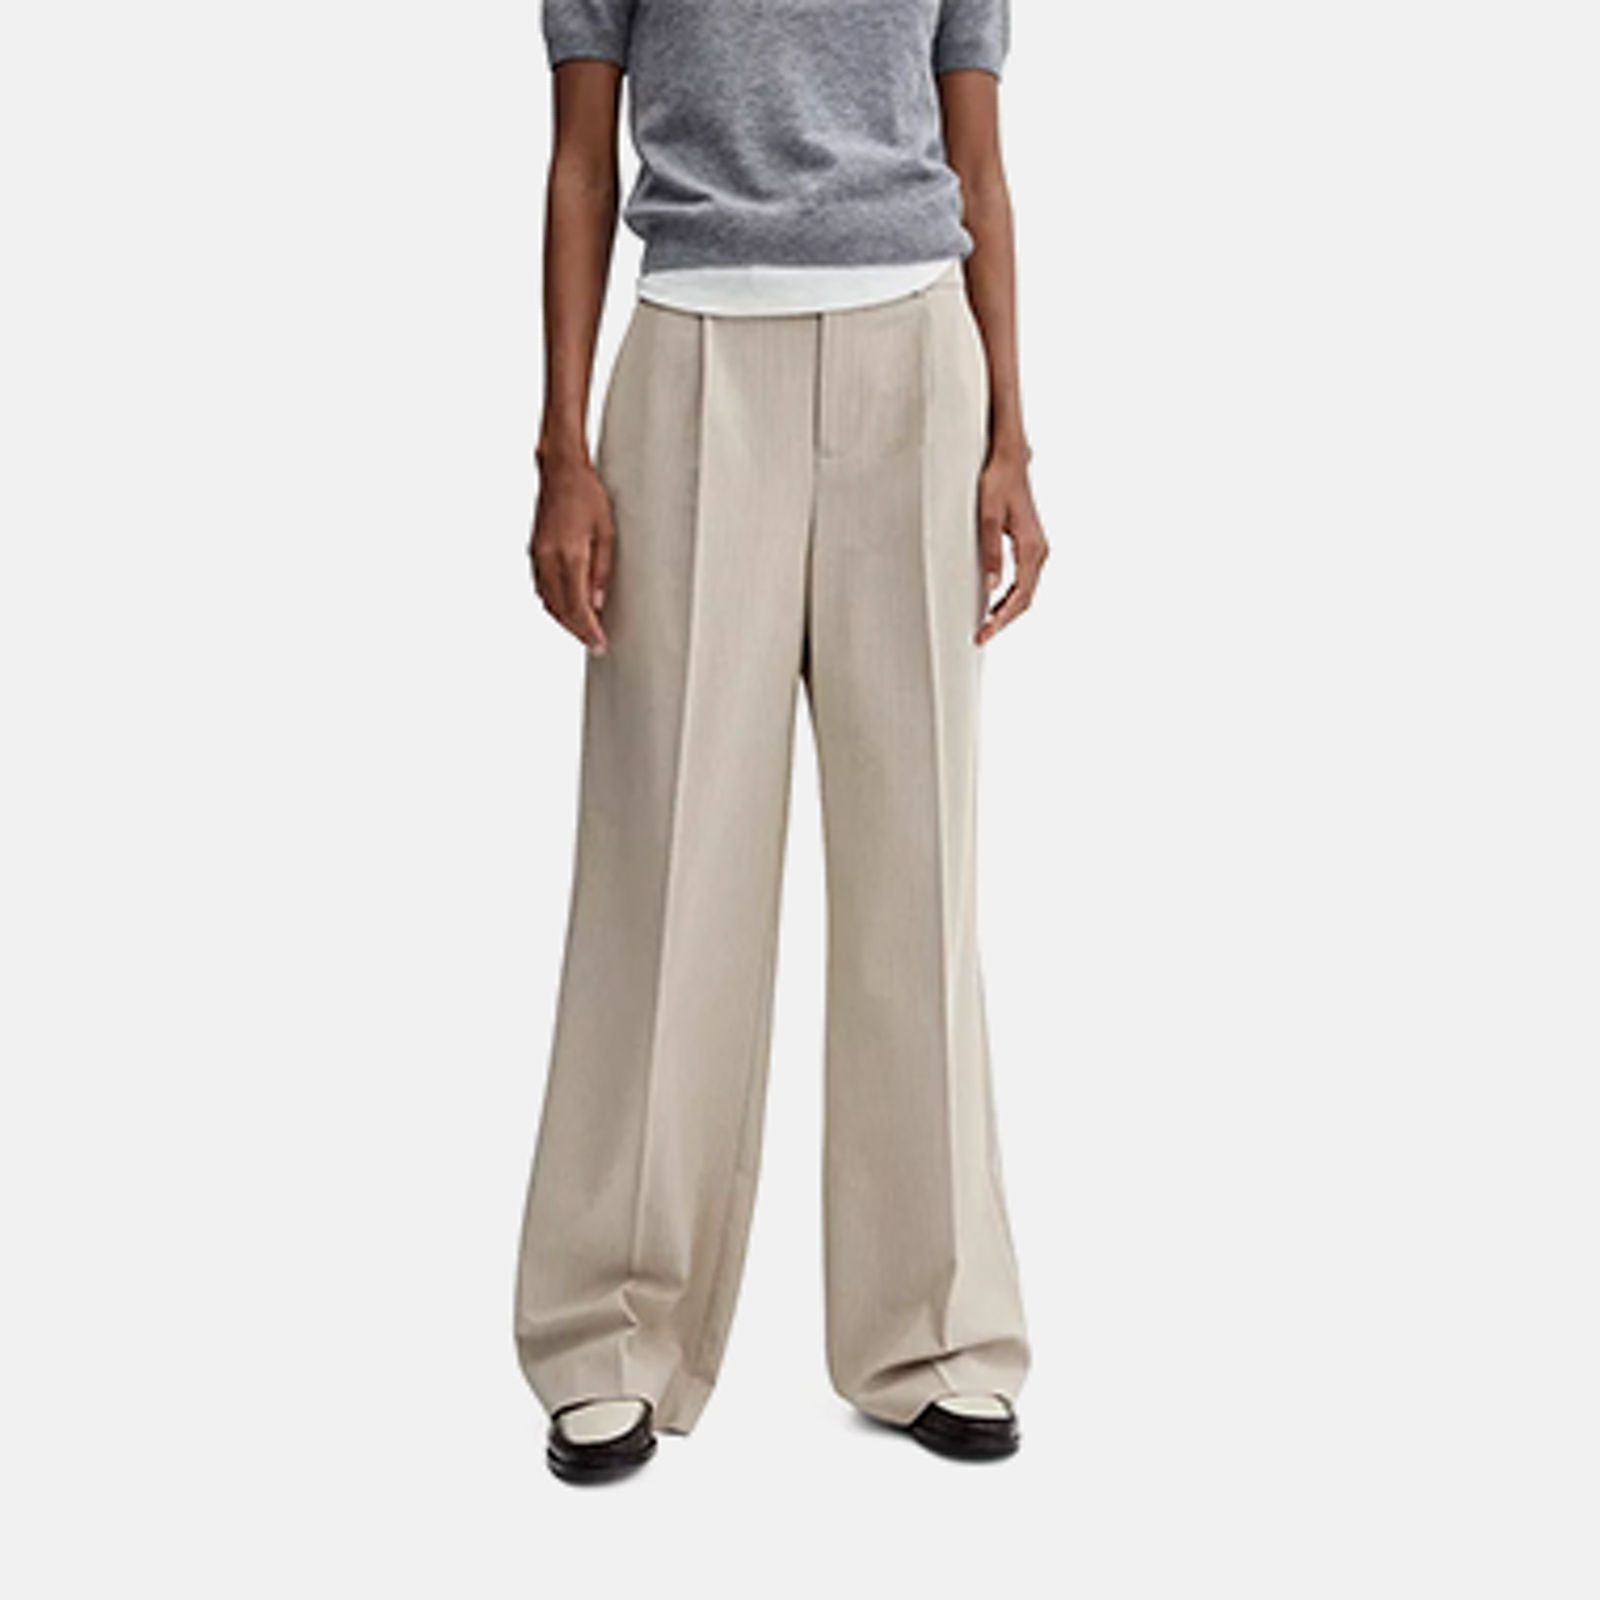 Pants New Arrivals: Women's Clothing - Macy's